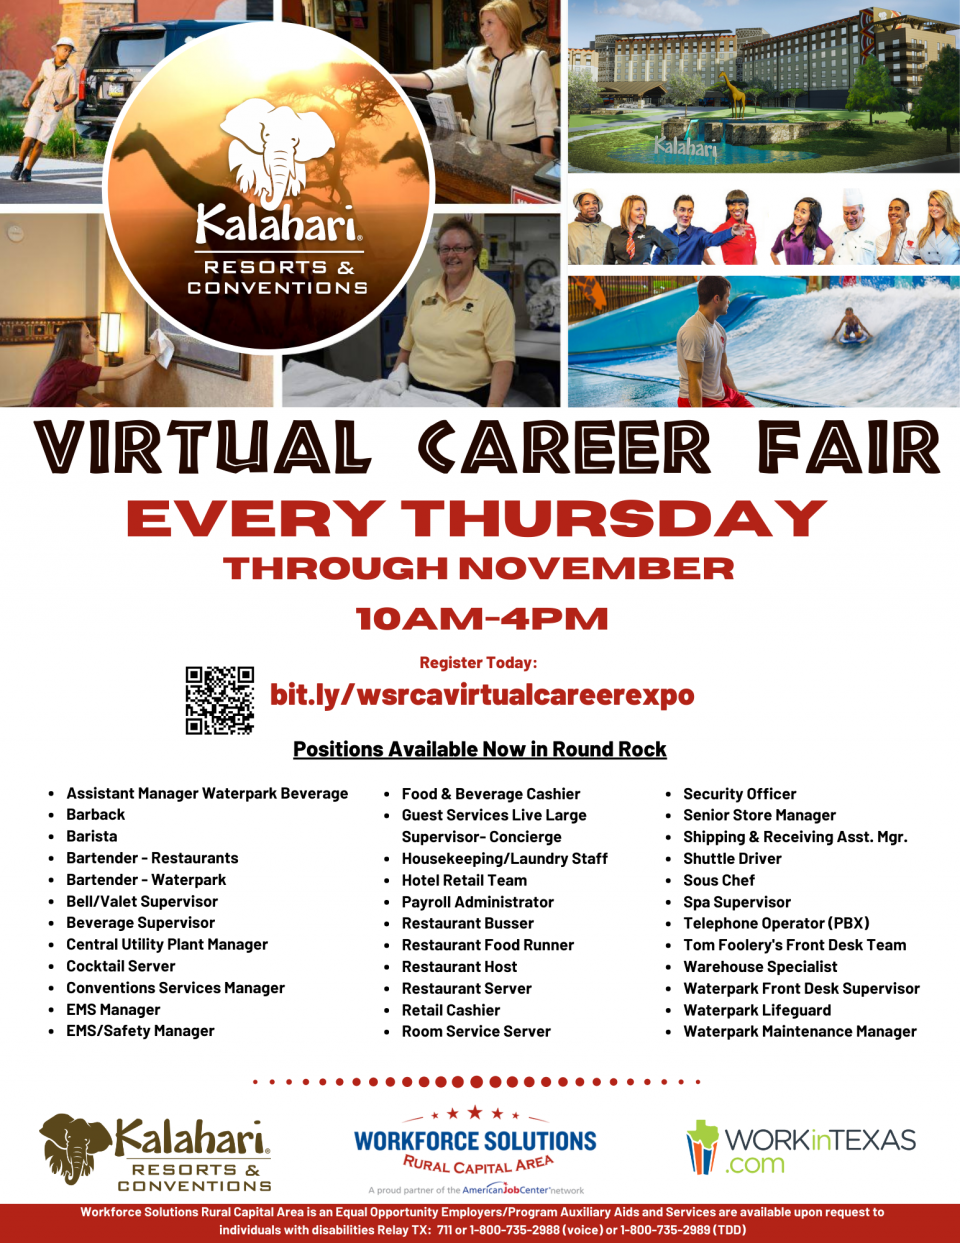 Don't Miss the Kalahari Resorts Virtual Career Fair Every Thursday Through November